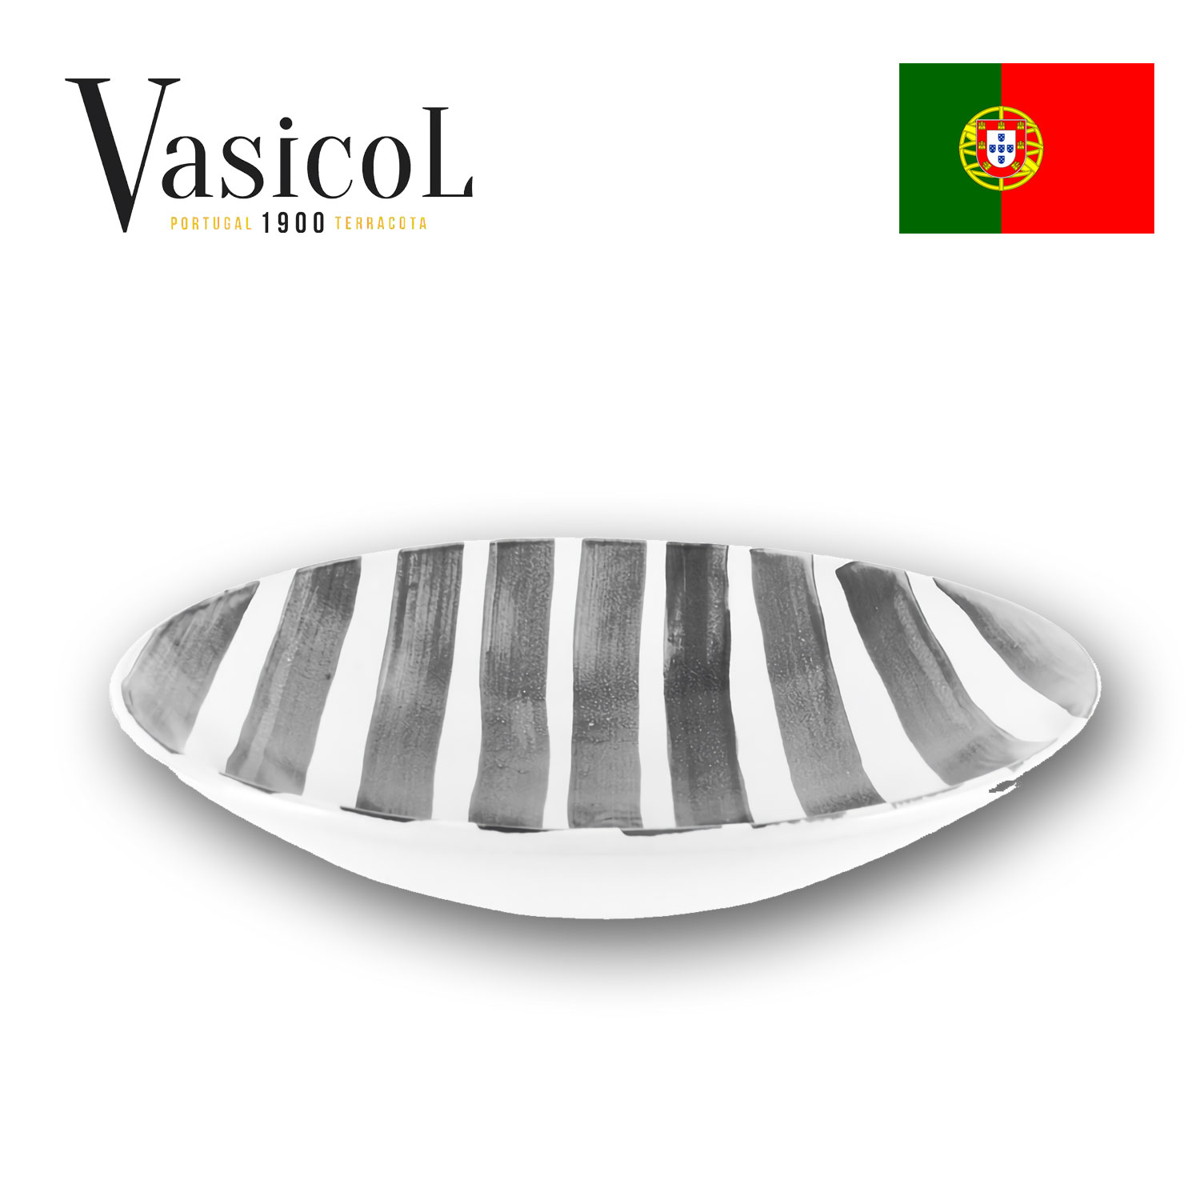 MARIA スモールサービングボウル ラージストライプ 皿 食器 ポルトガル製 テラコッタ 陶器